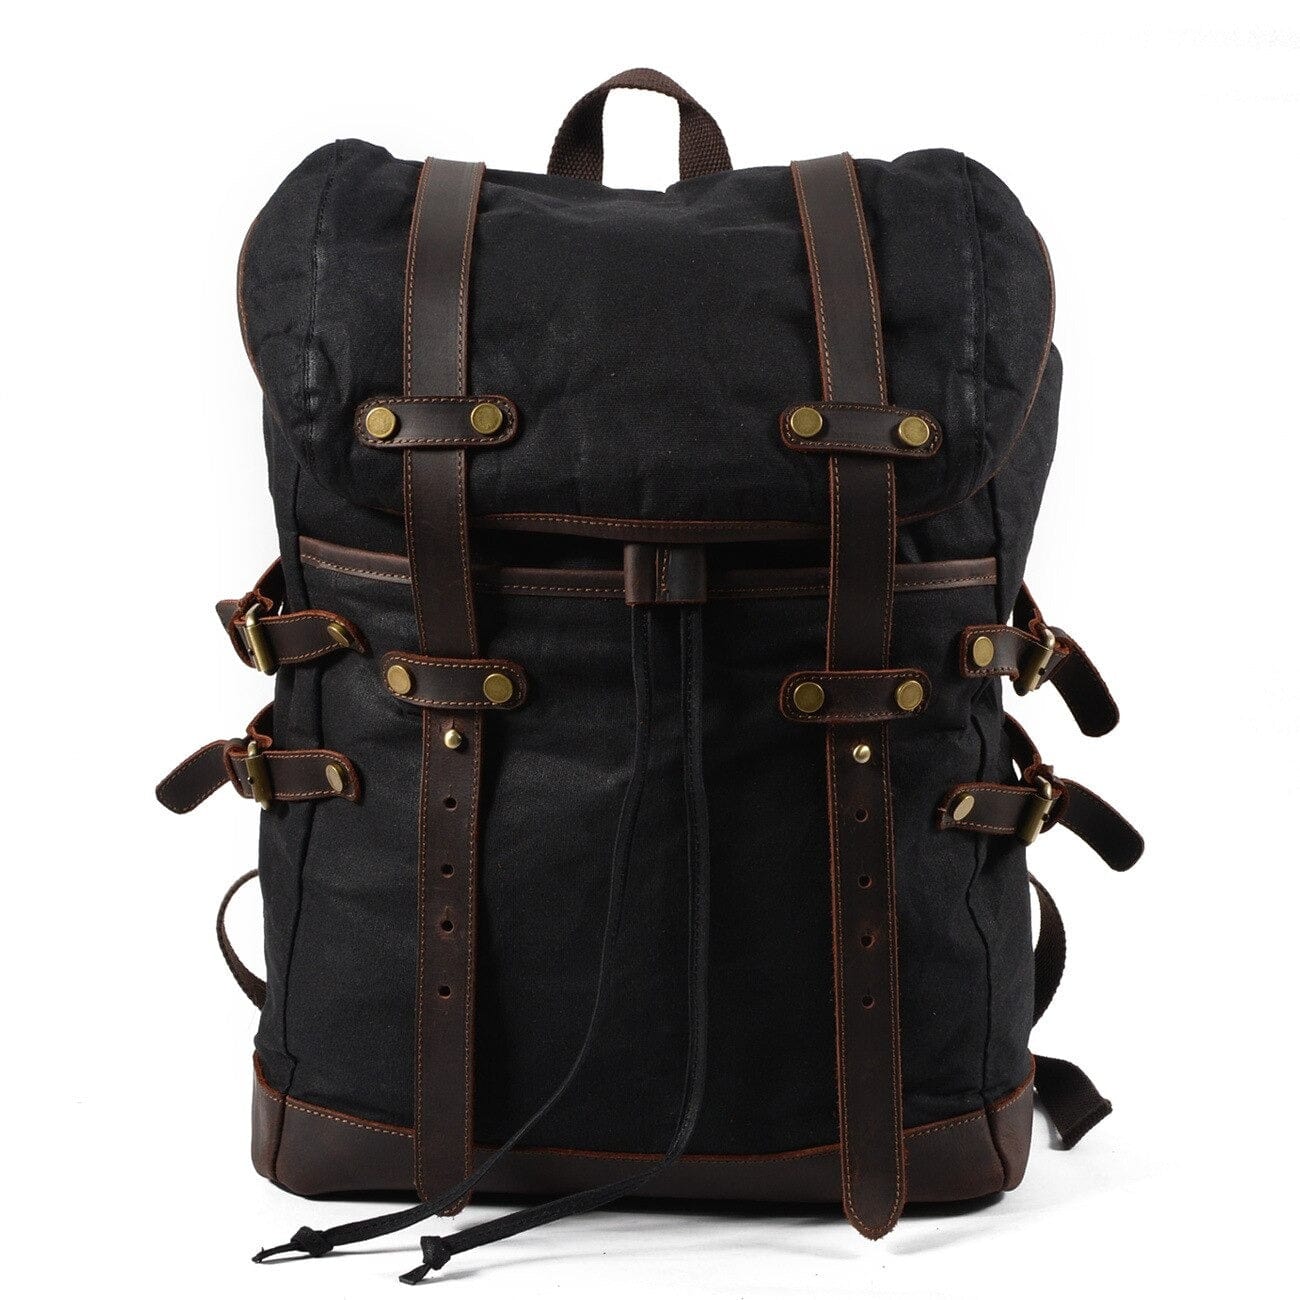 Retro Backpack "Esme" Black Color - Gentcreate